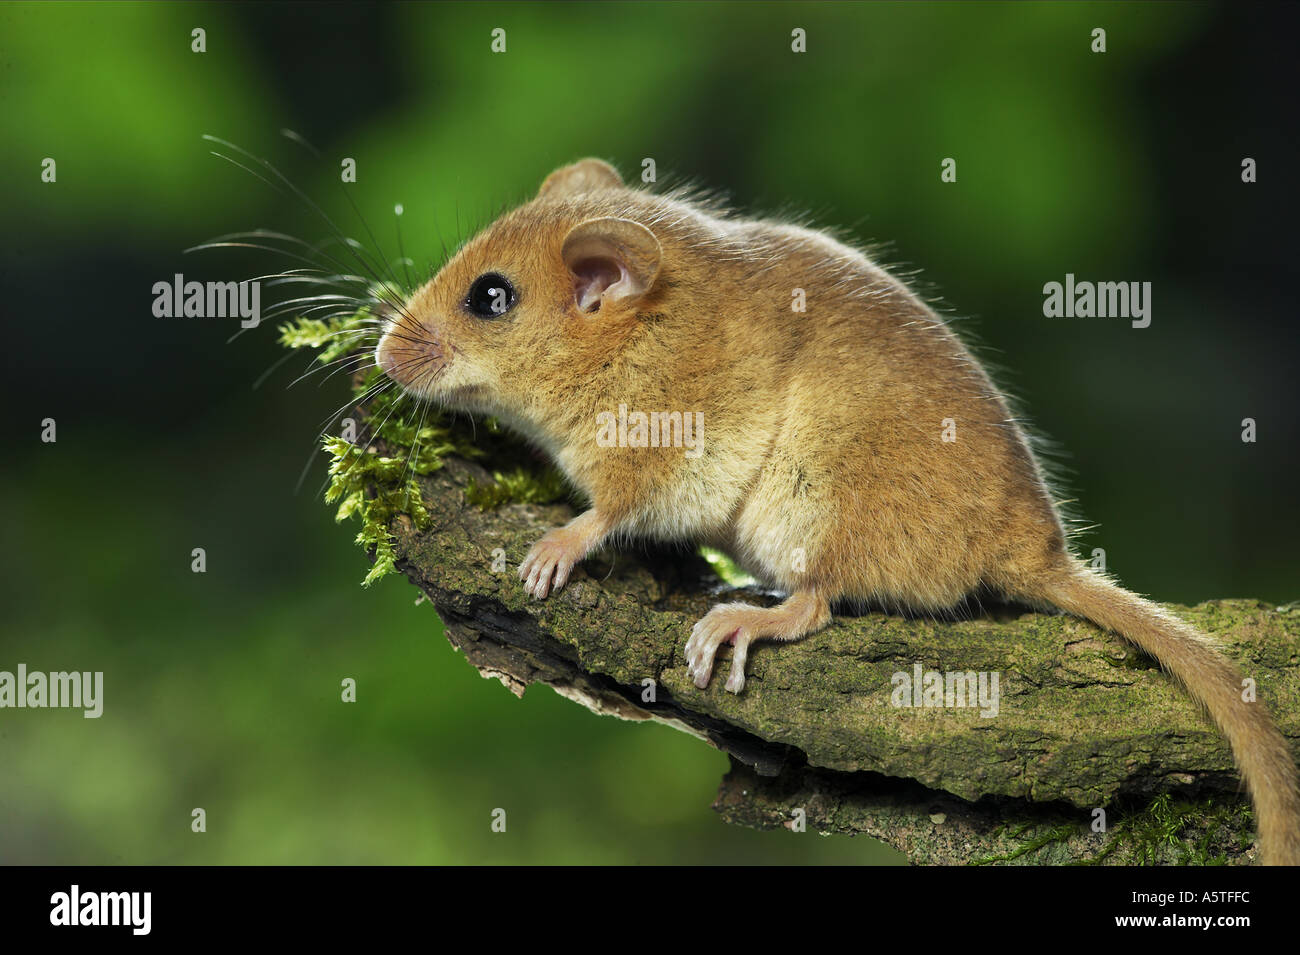 hazel mouse on root / Muscaridinus avellanarius Stock Photo